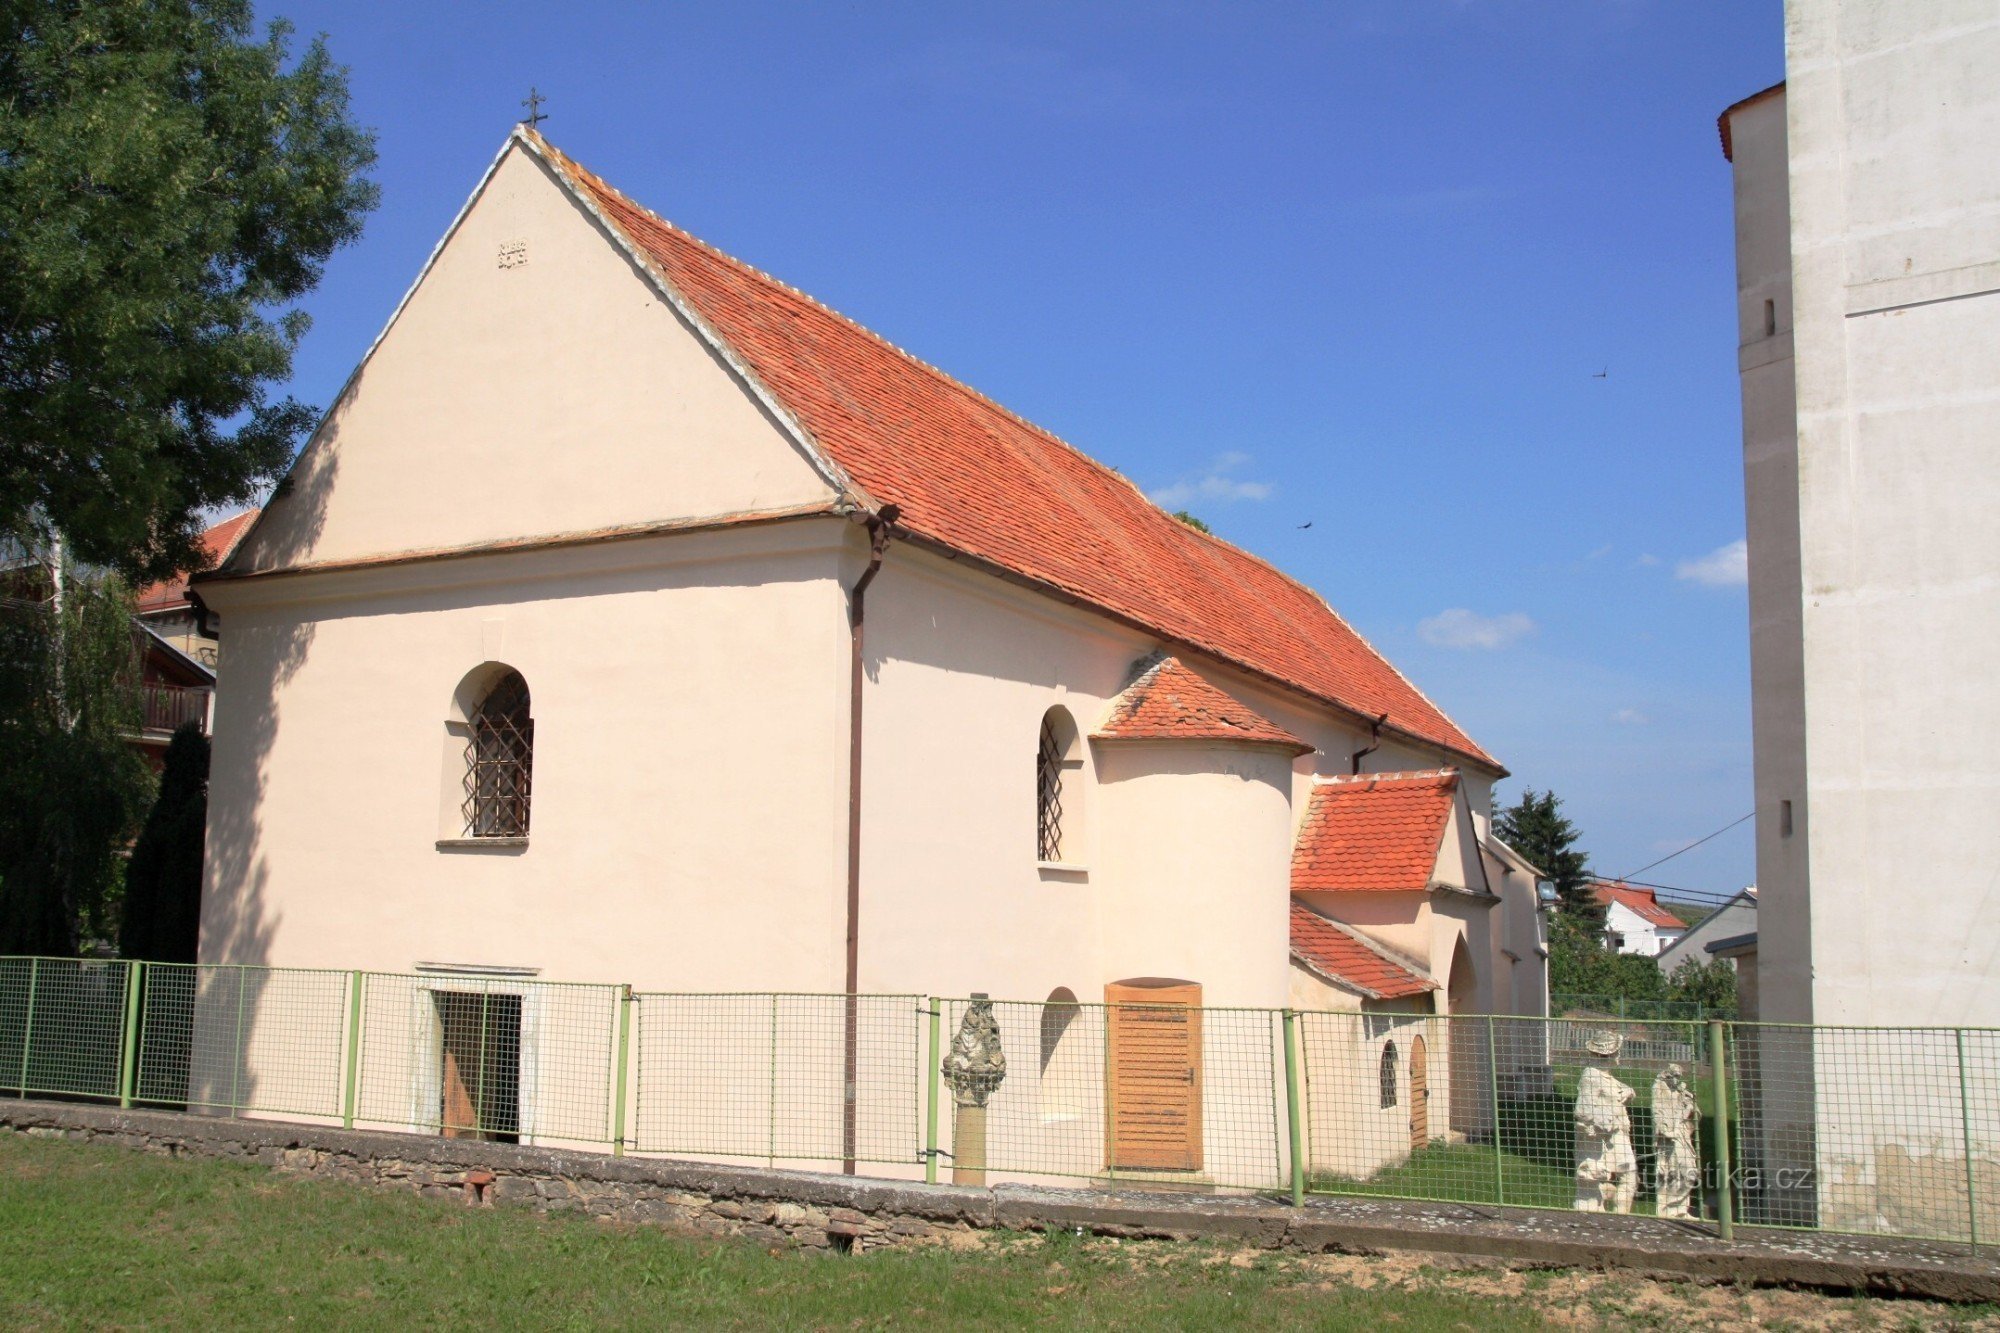 Přítluky - crkva sv. Tržišta sa zapada